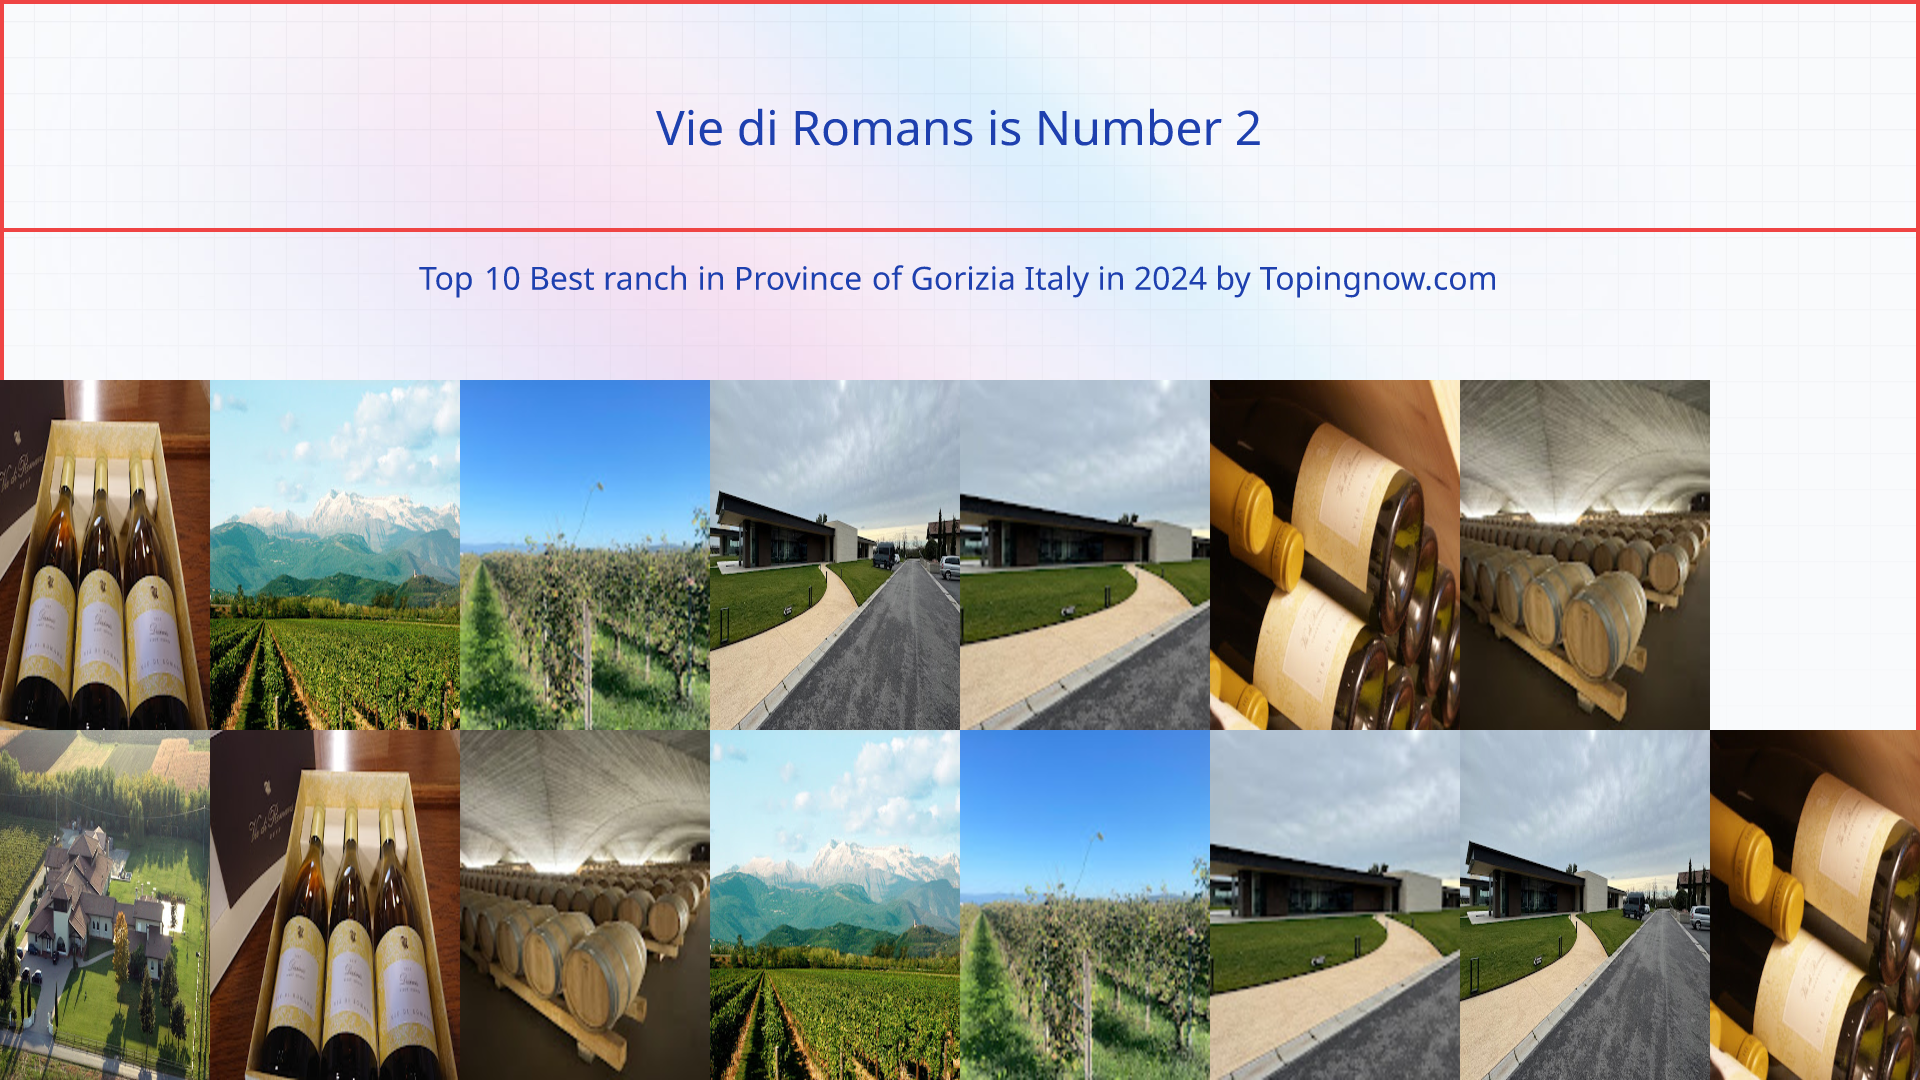 Vie di Romans: Top 10 Best ranch in Province of Gorizia Italy in 2024